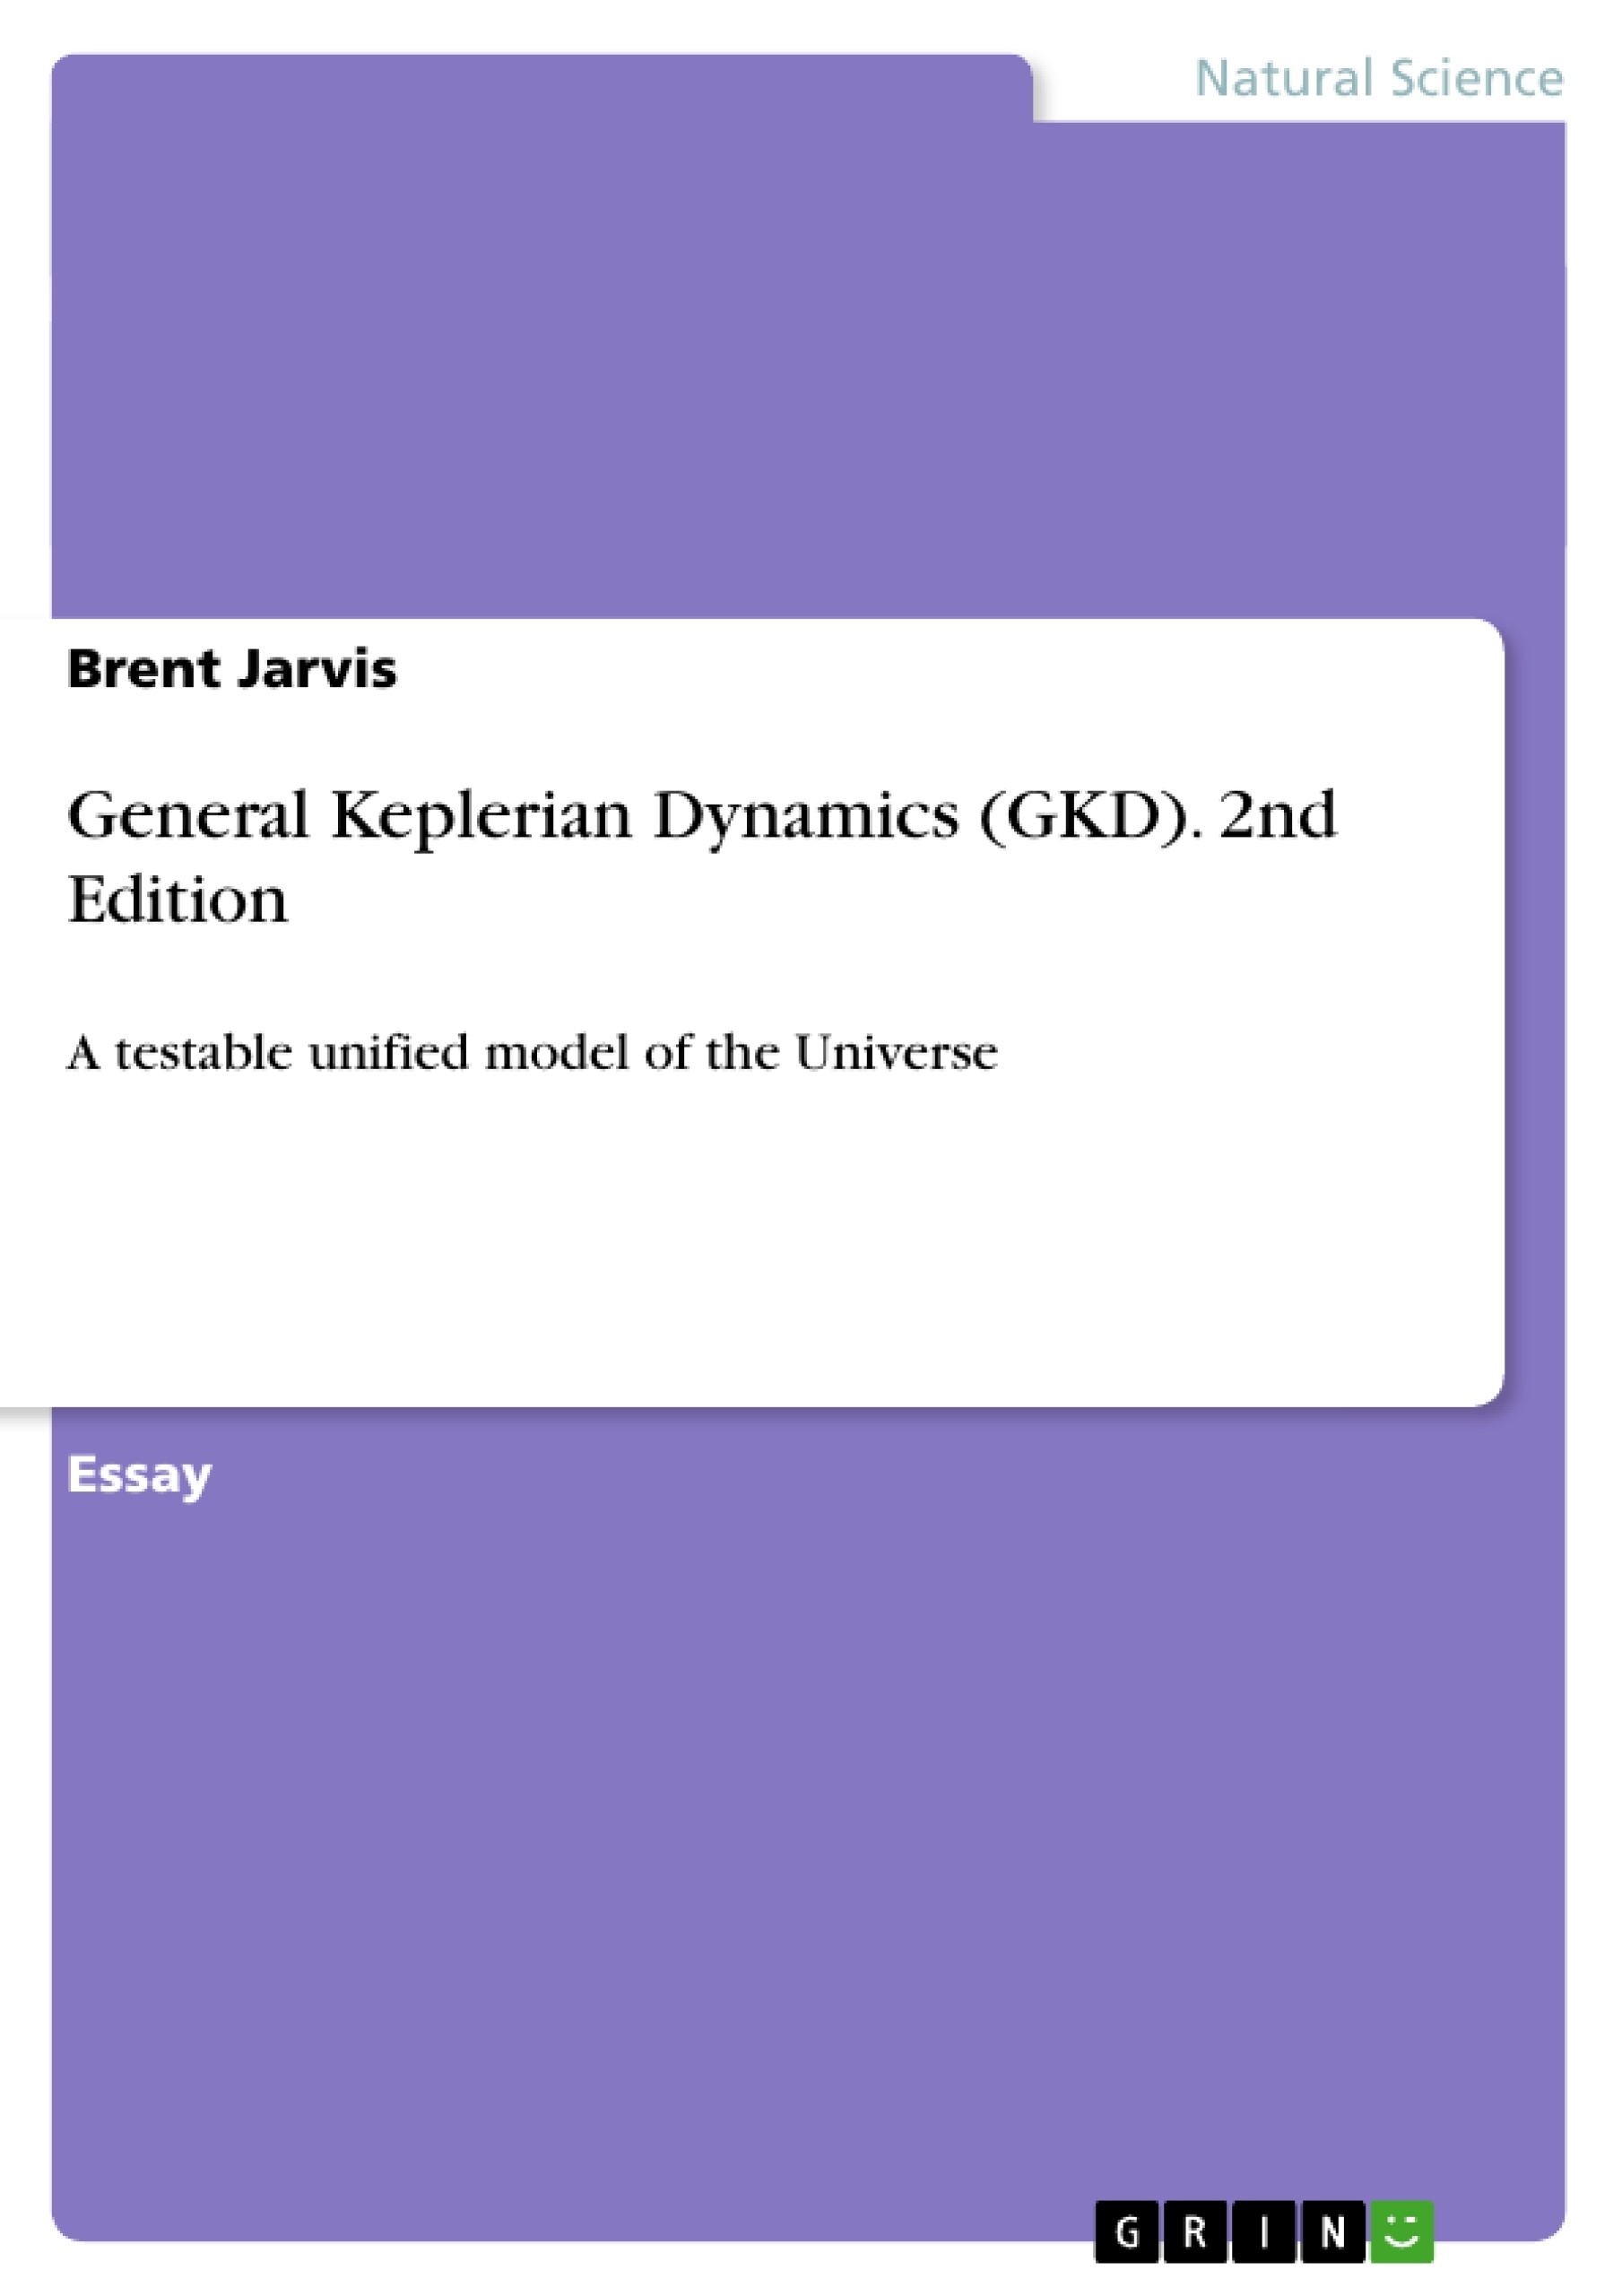 Titre: General Keplerian Dynamics (GKD). 2nd Edition